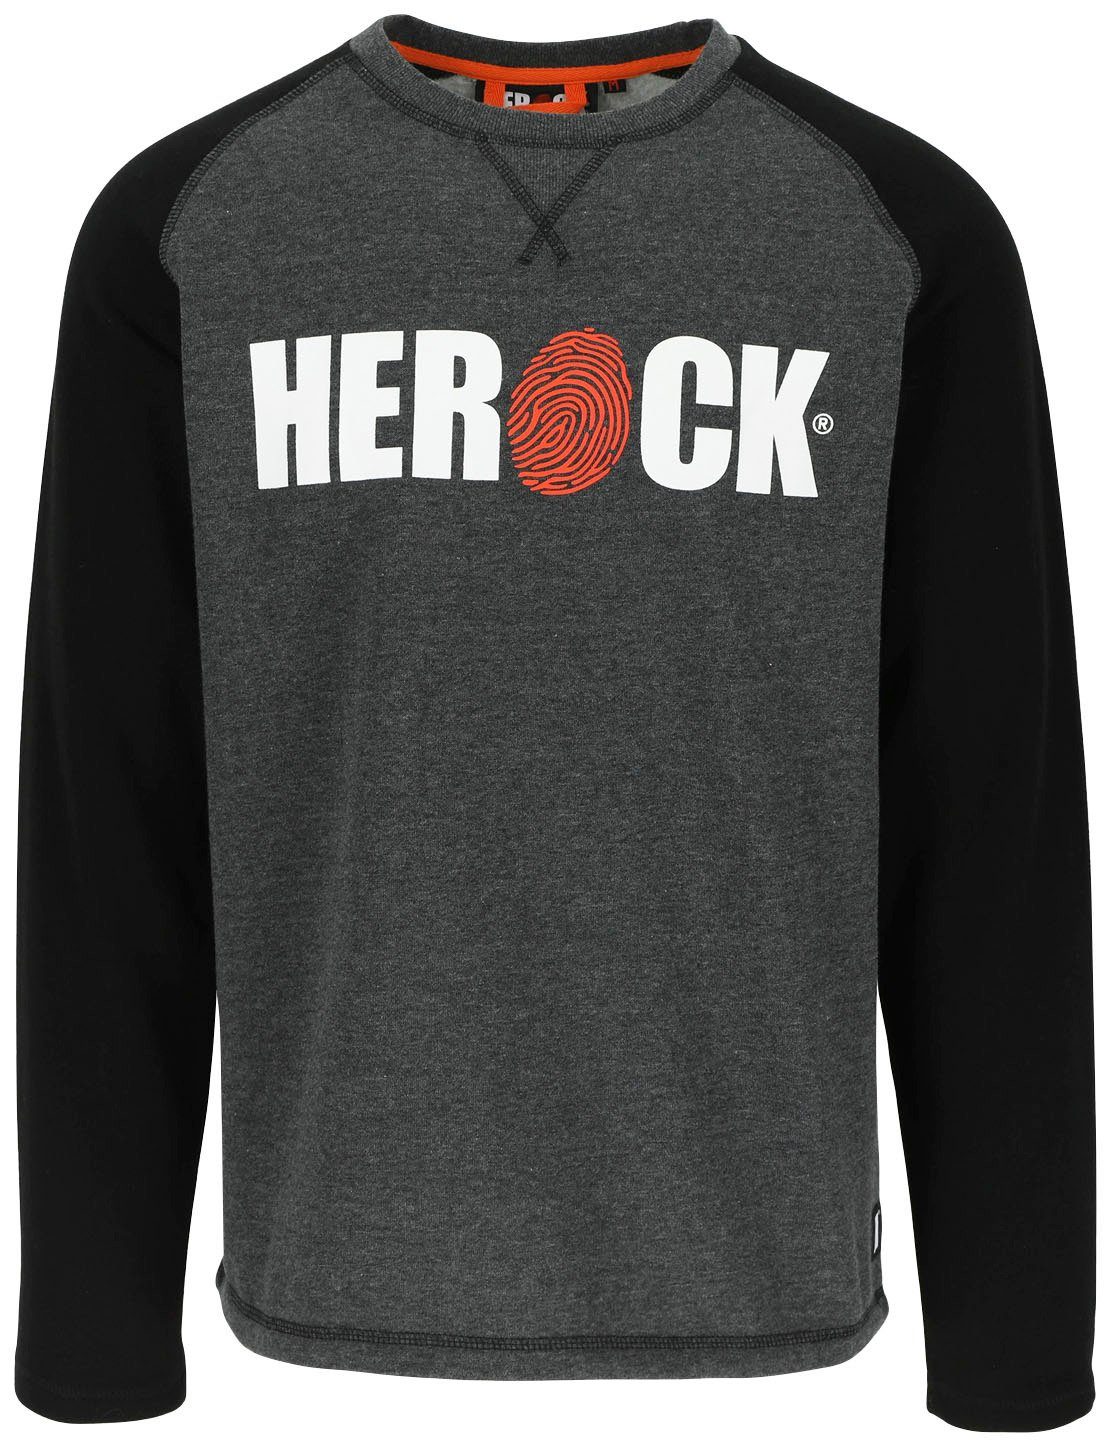 Aufdruck, Sweater Rundhals, mit 2-Farbig Herock®- Langarmshirt ROLES Schwarz/Grau T-Shirt/Sweater, Herock